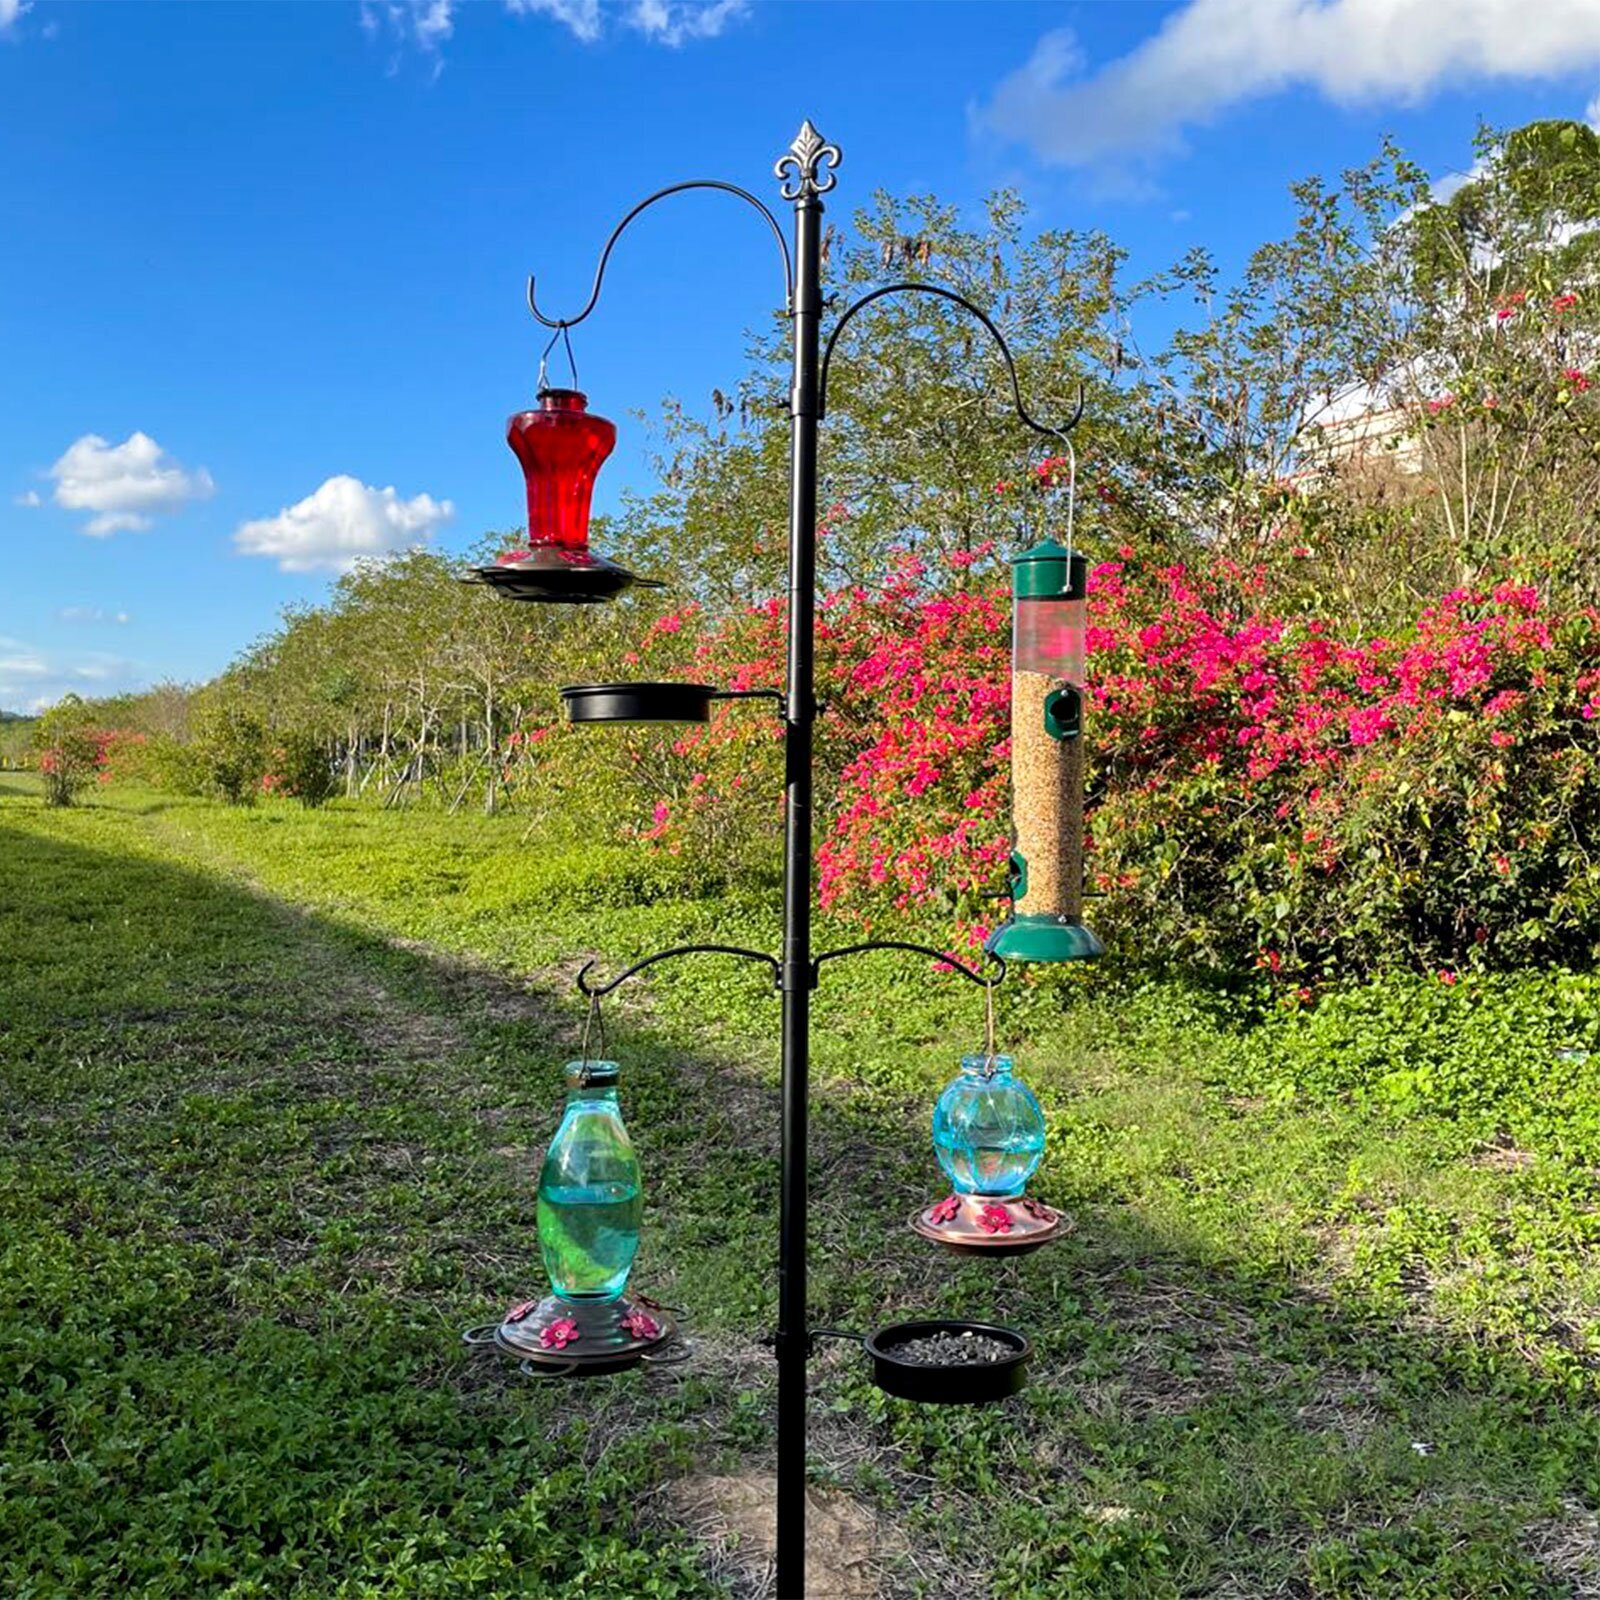 Decorating your bird feeding station